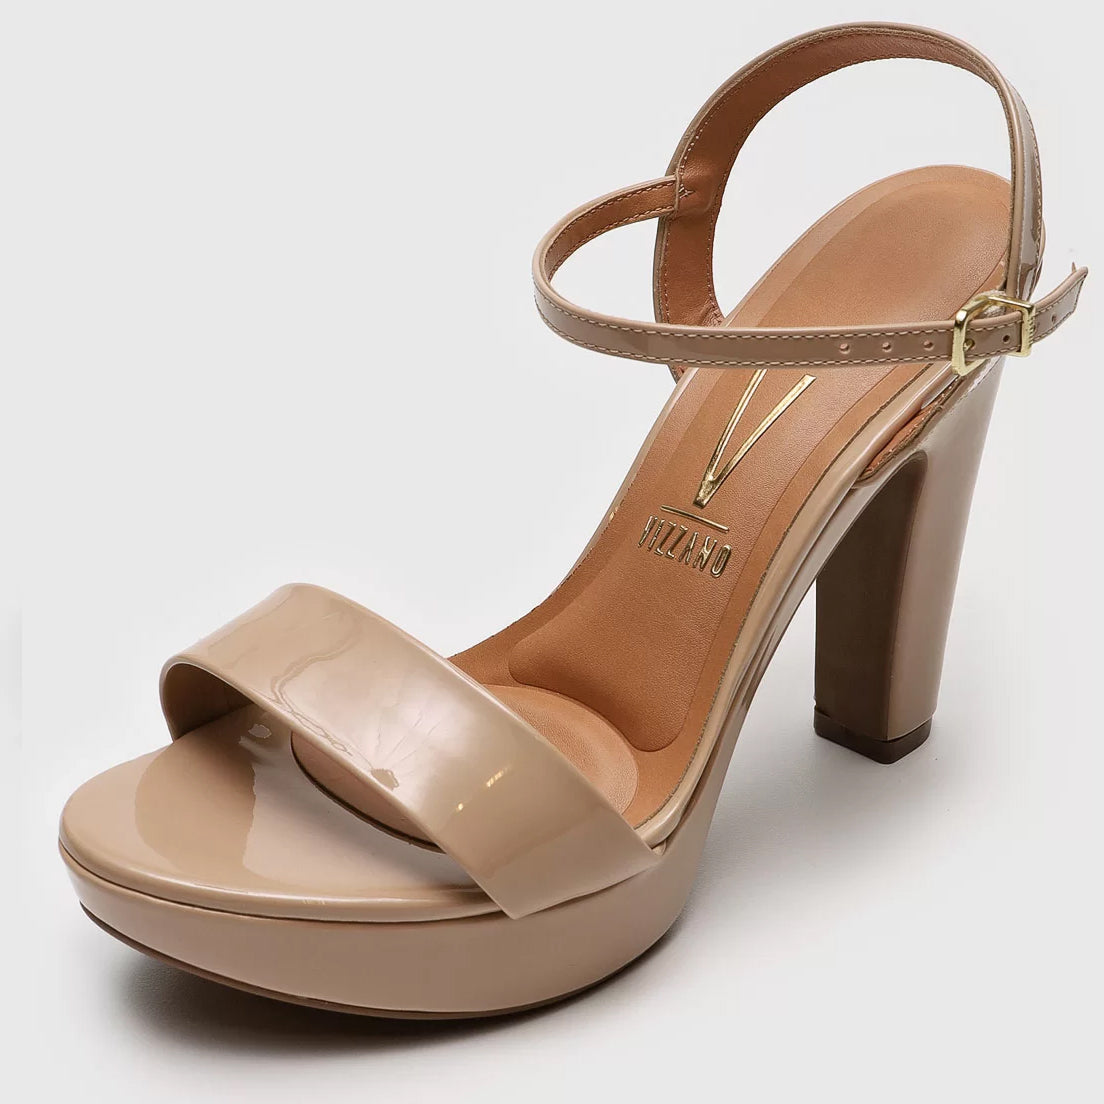 Vizzano 6292-200 High Heel Platform Sandal in Beige Patent